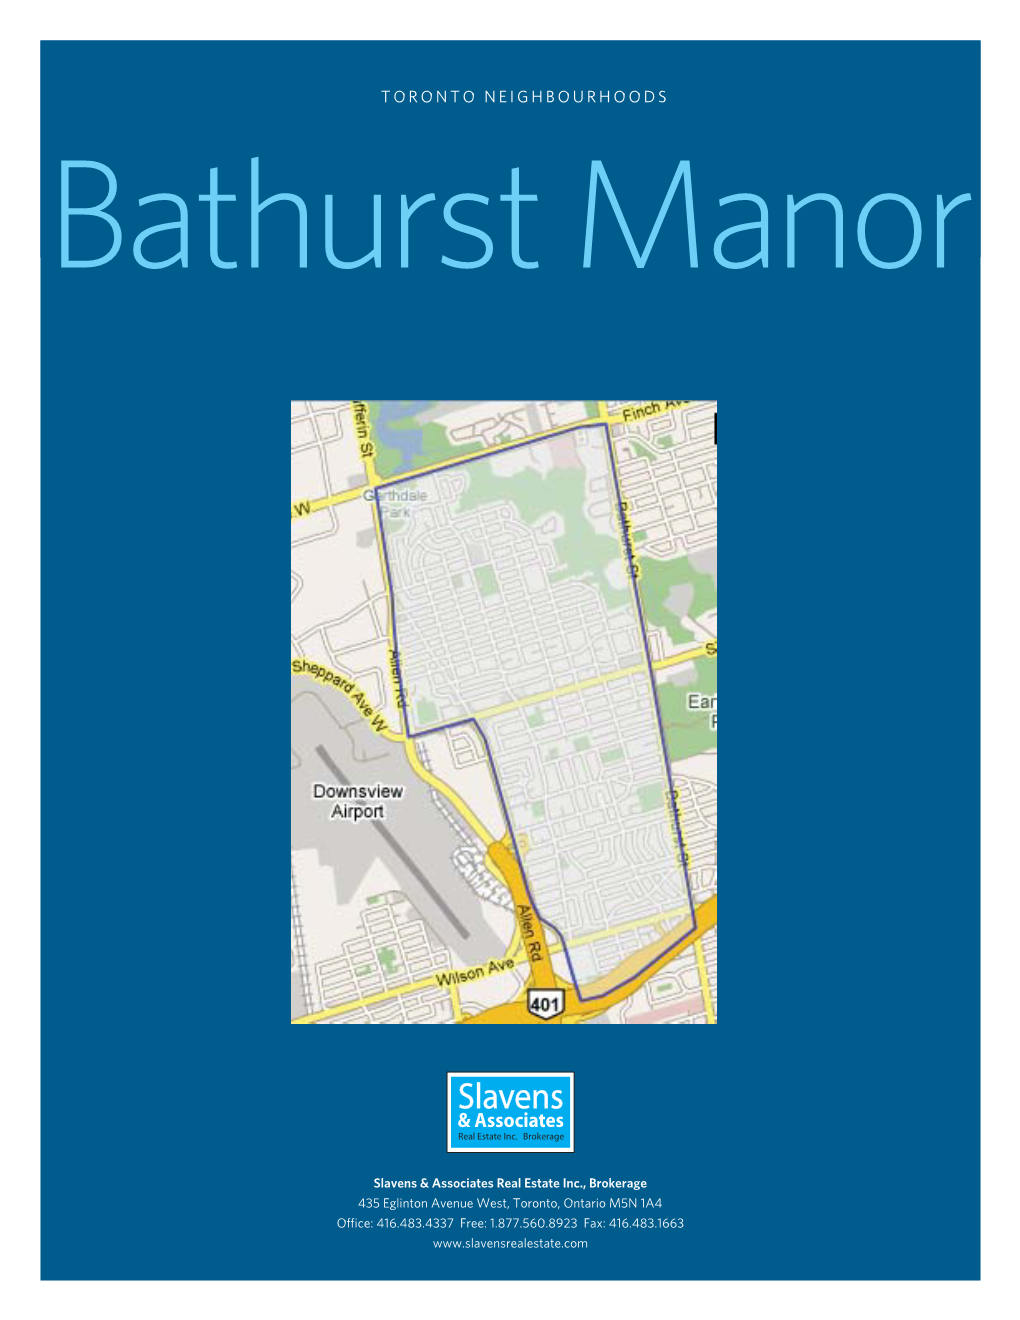 Bathurst Manor Branded to Neighbourhood.Indd